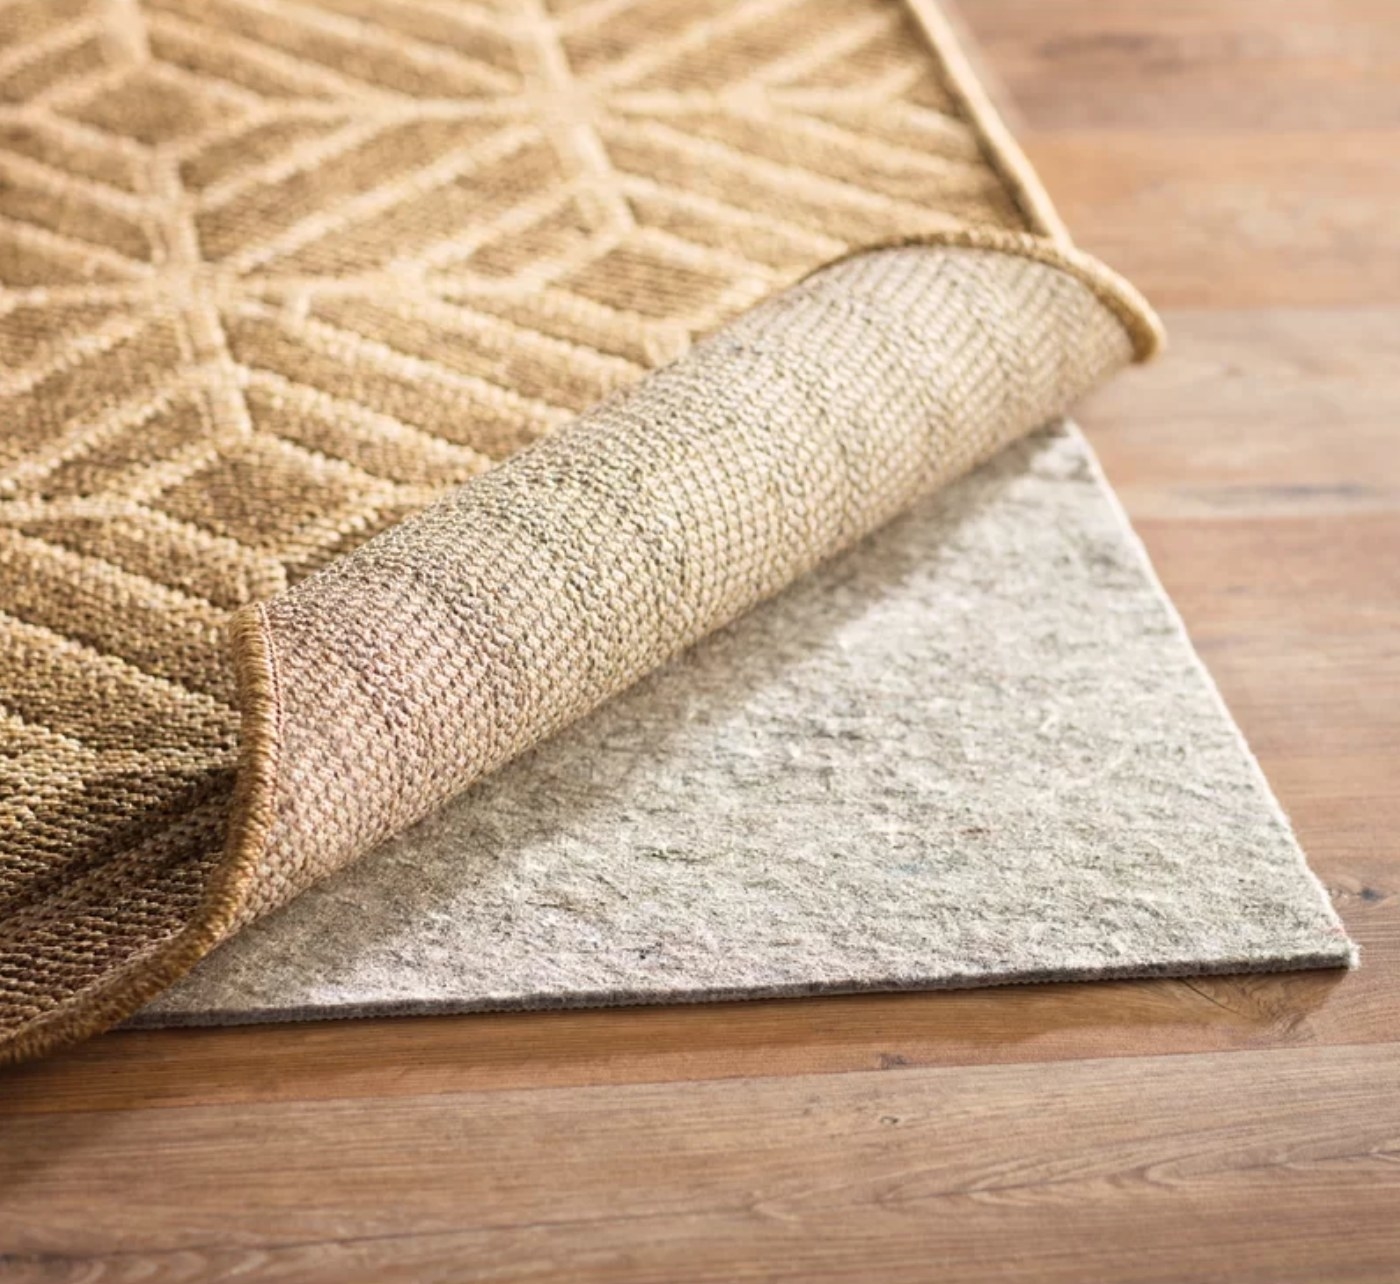 the Wayfair dual surface non-slip rug